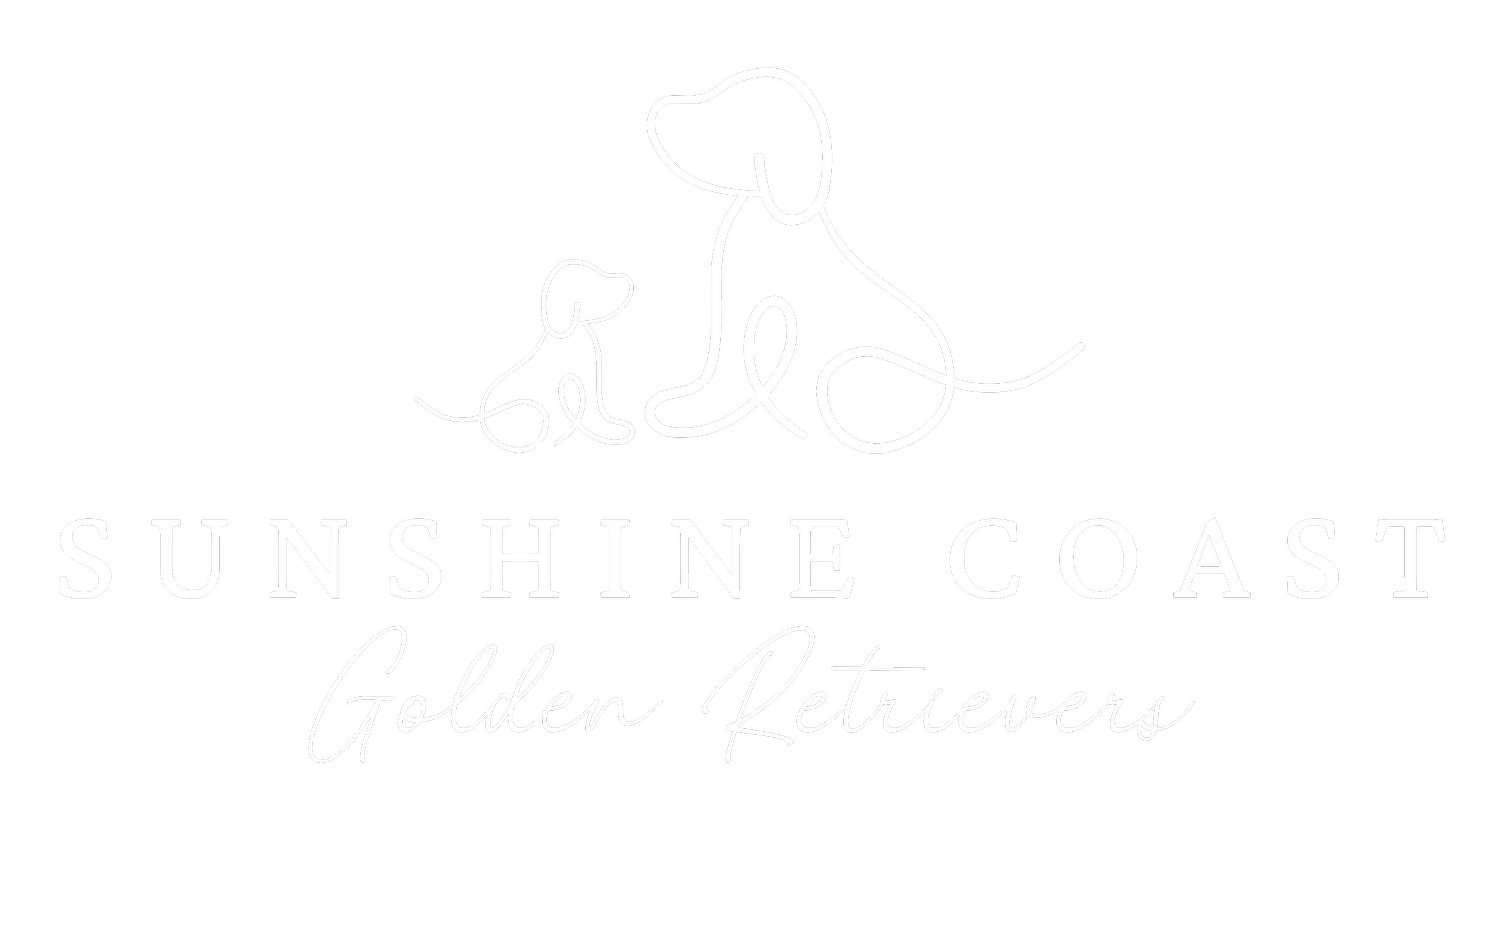 Sunshine Coast Golden Retrievers